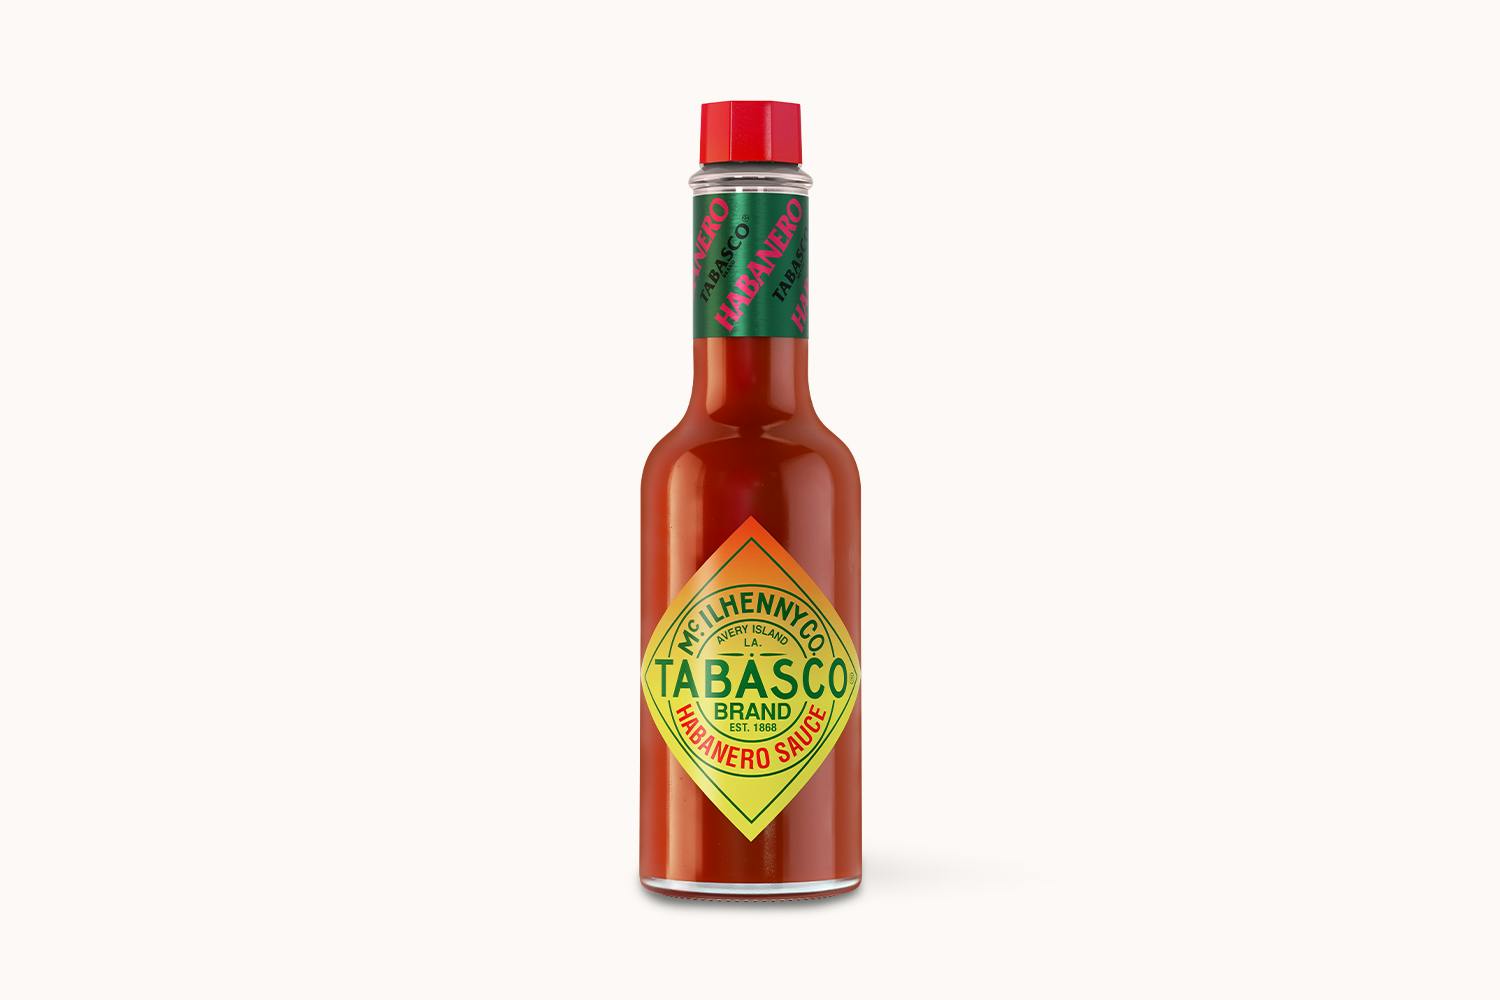 Tabasco Habanero Pepper Sauce